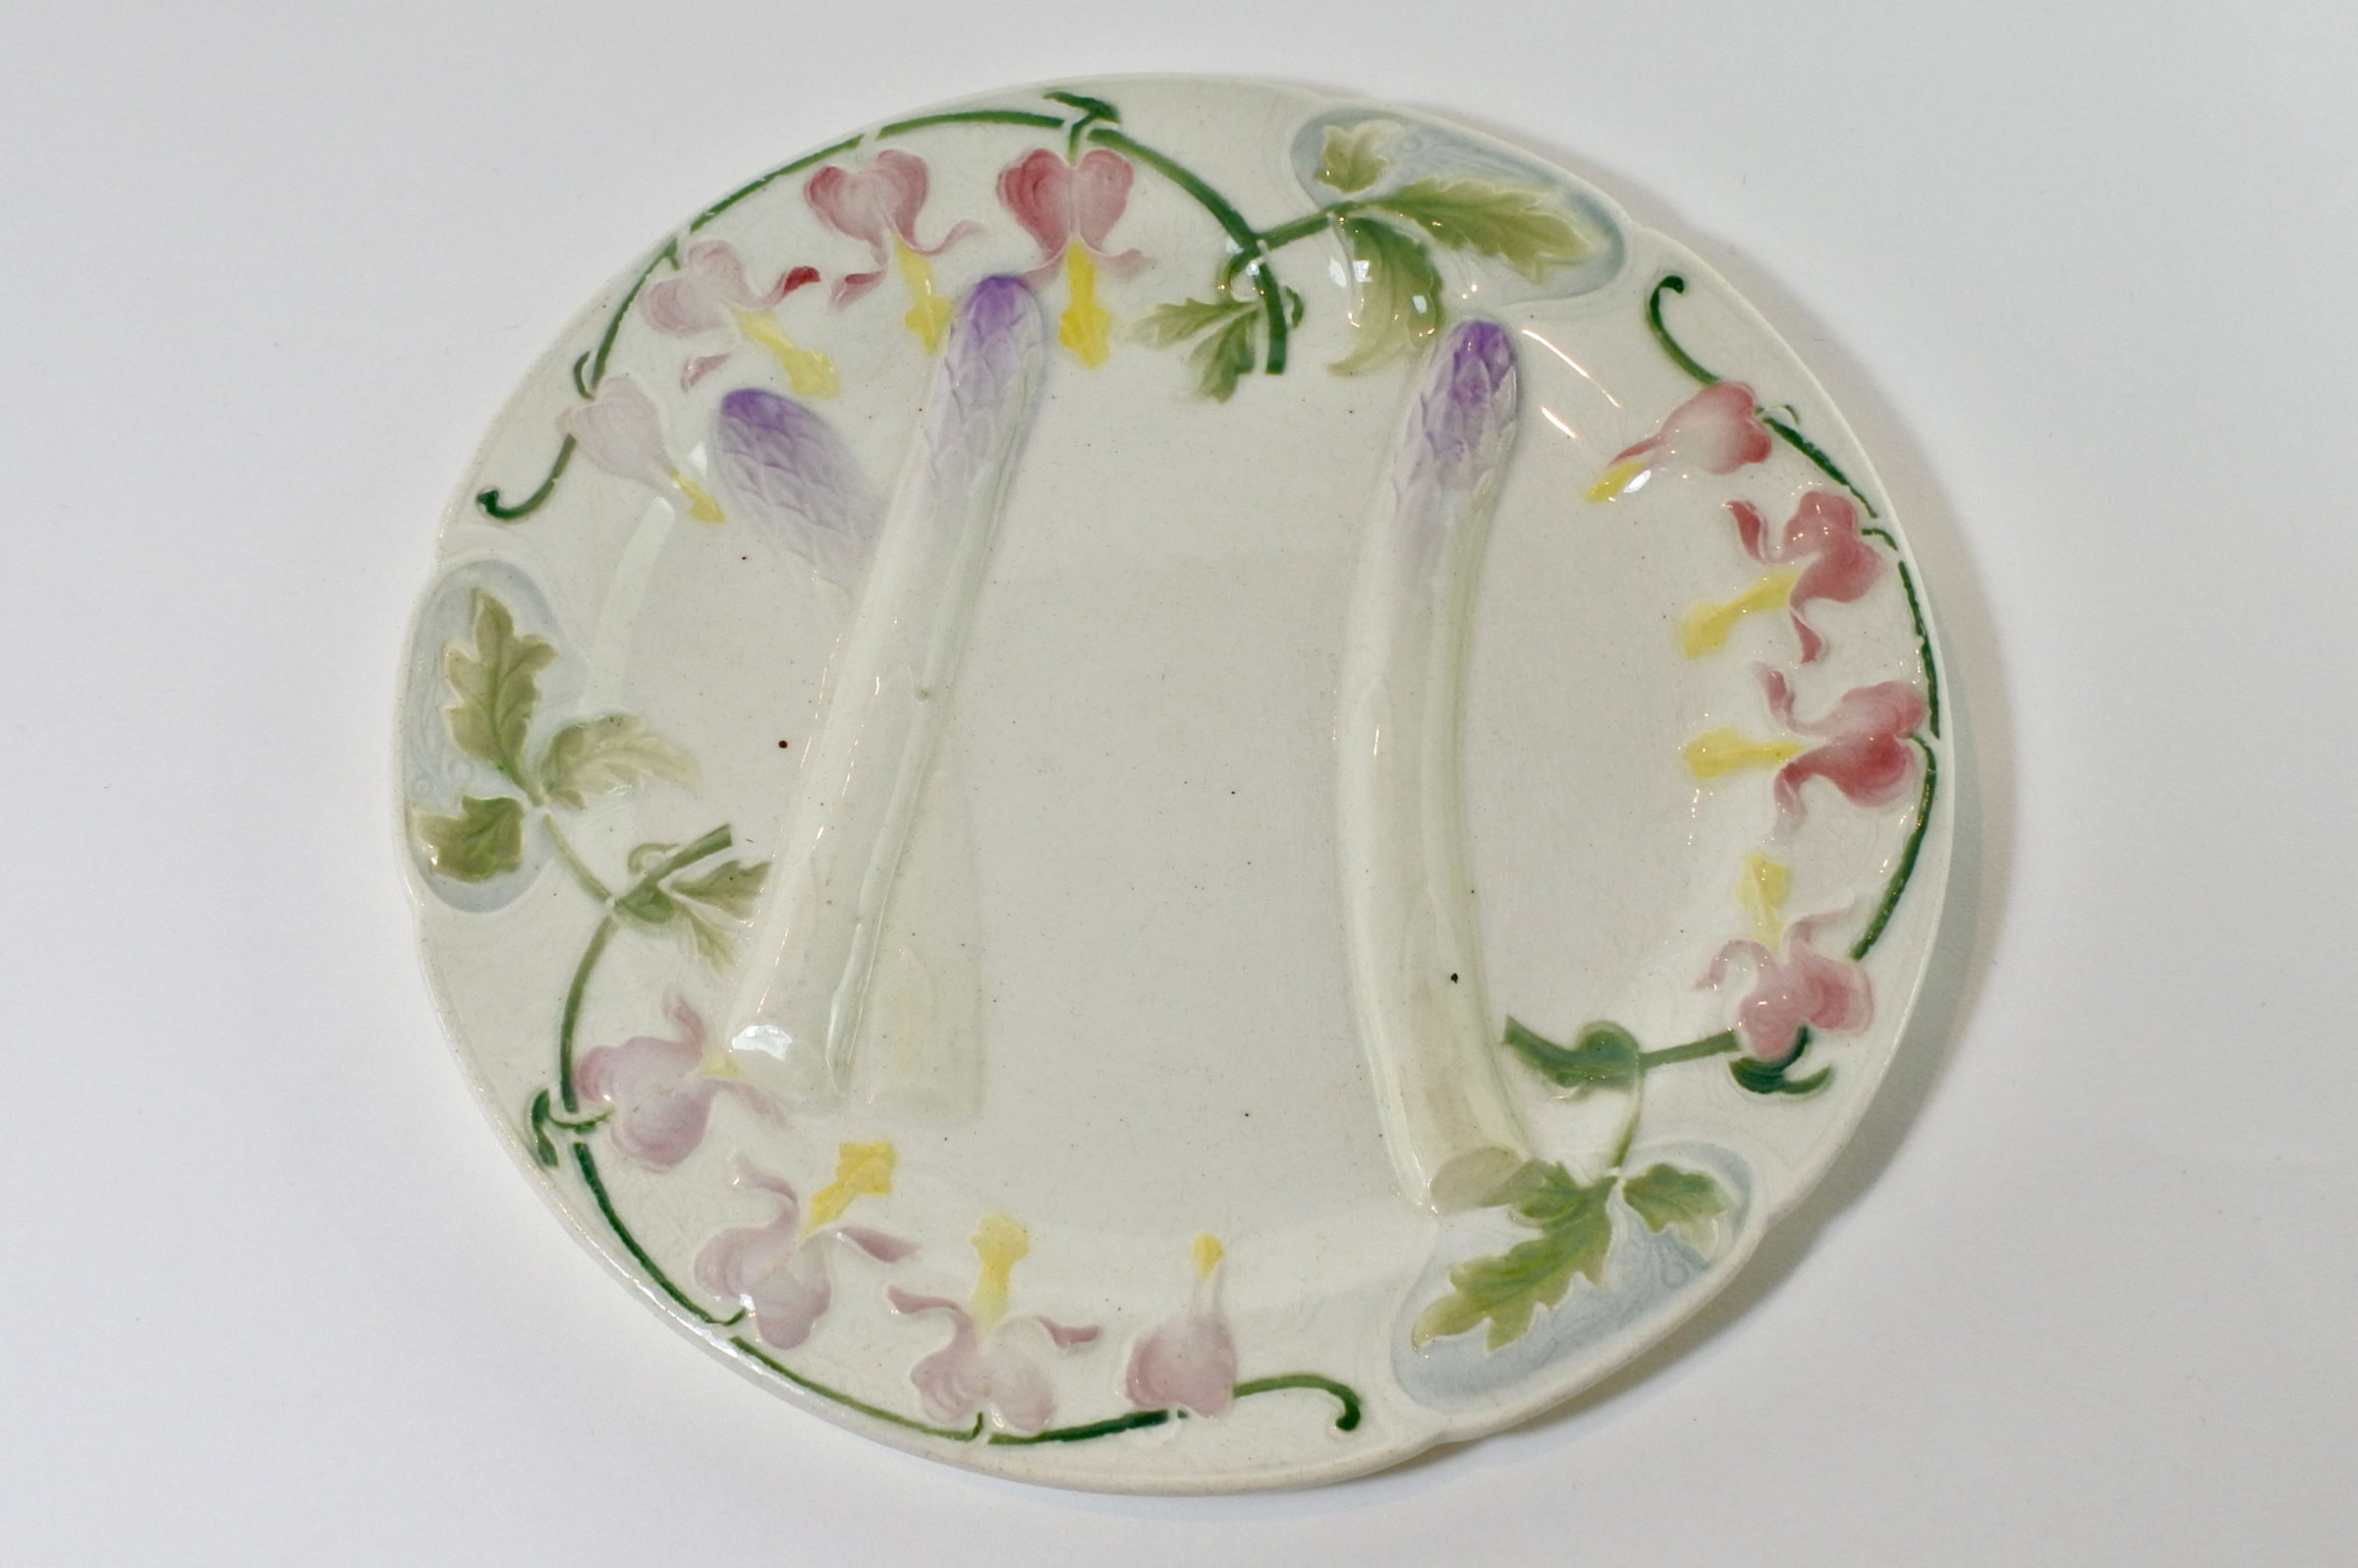 Piatto in ceramica barbotine per asparagi - Saint Clément - fondo bianco